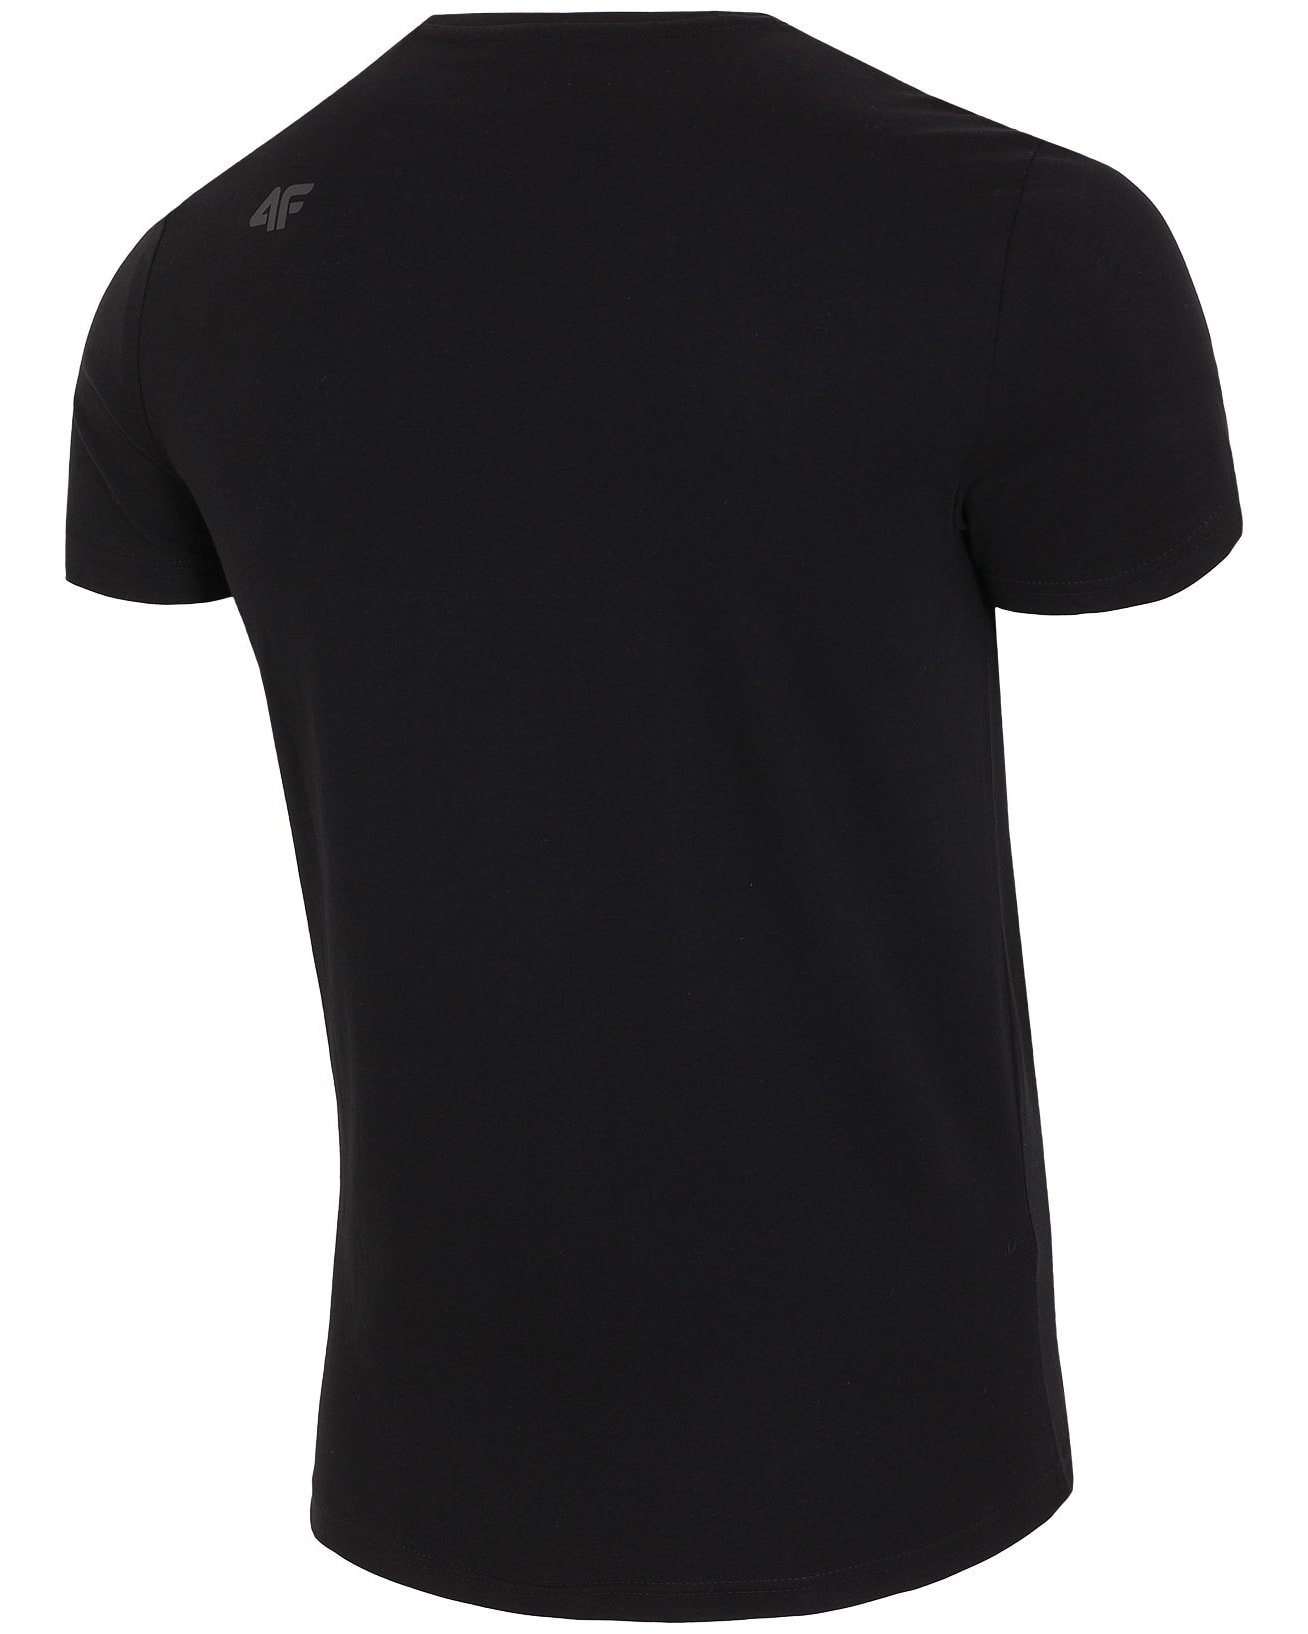 4F Man's T-Shirt - Black